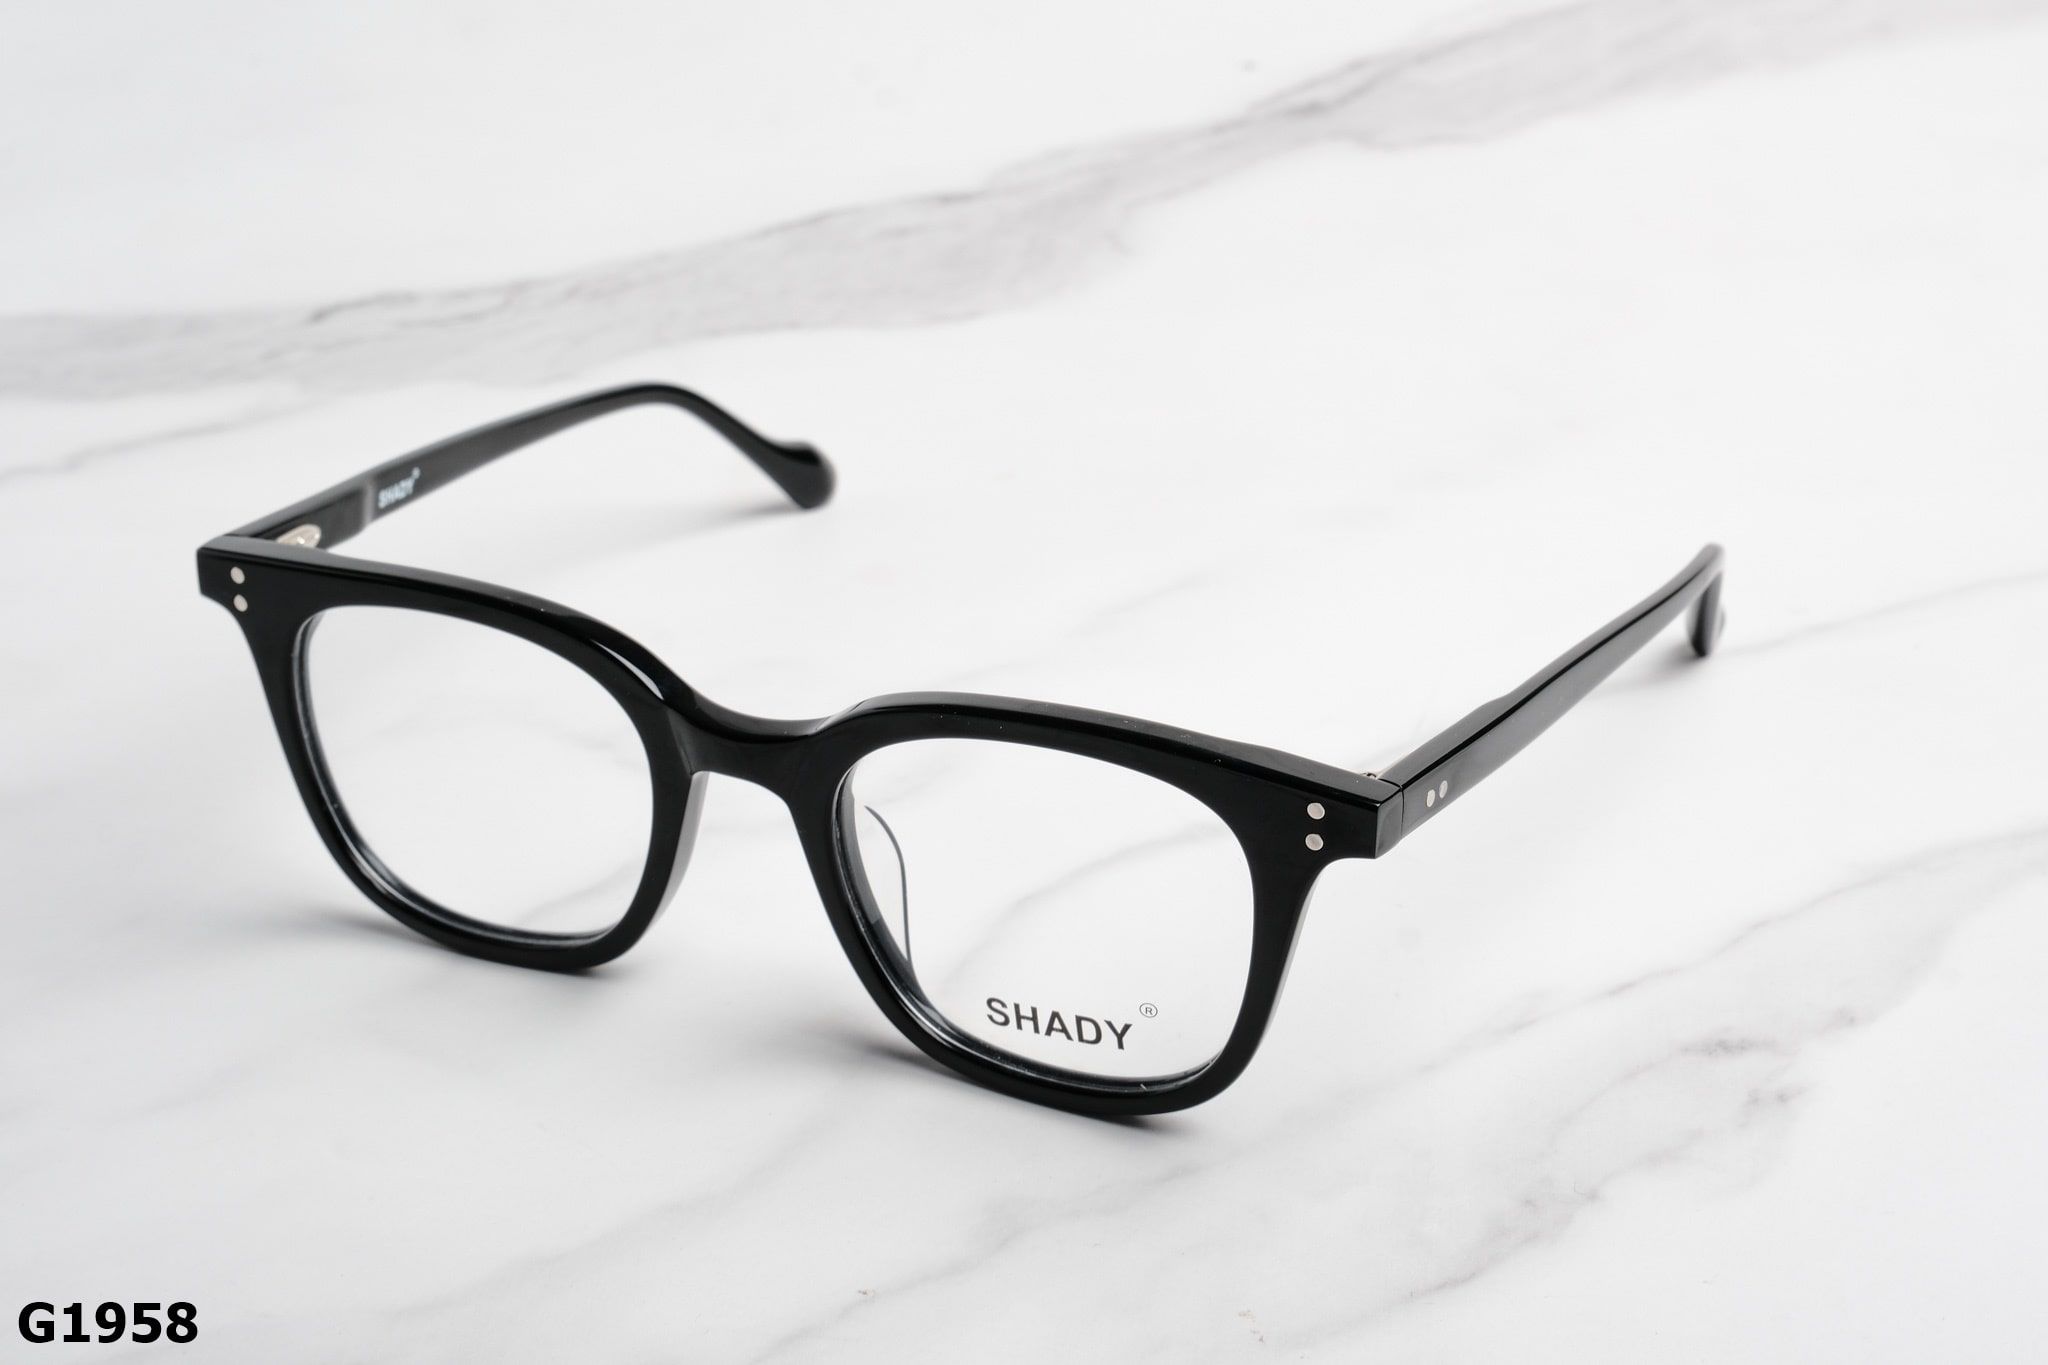  SHADY Eyewear - Glasses - G1958 